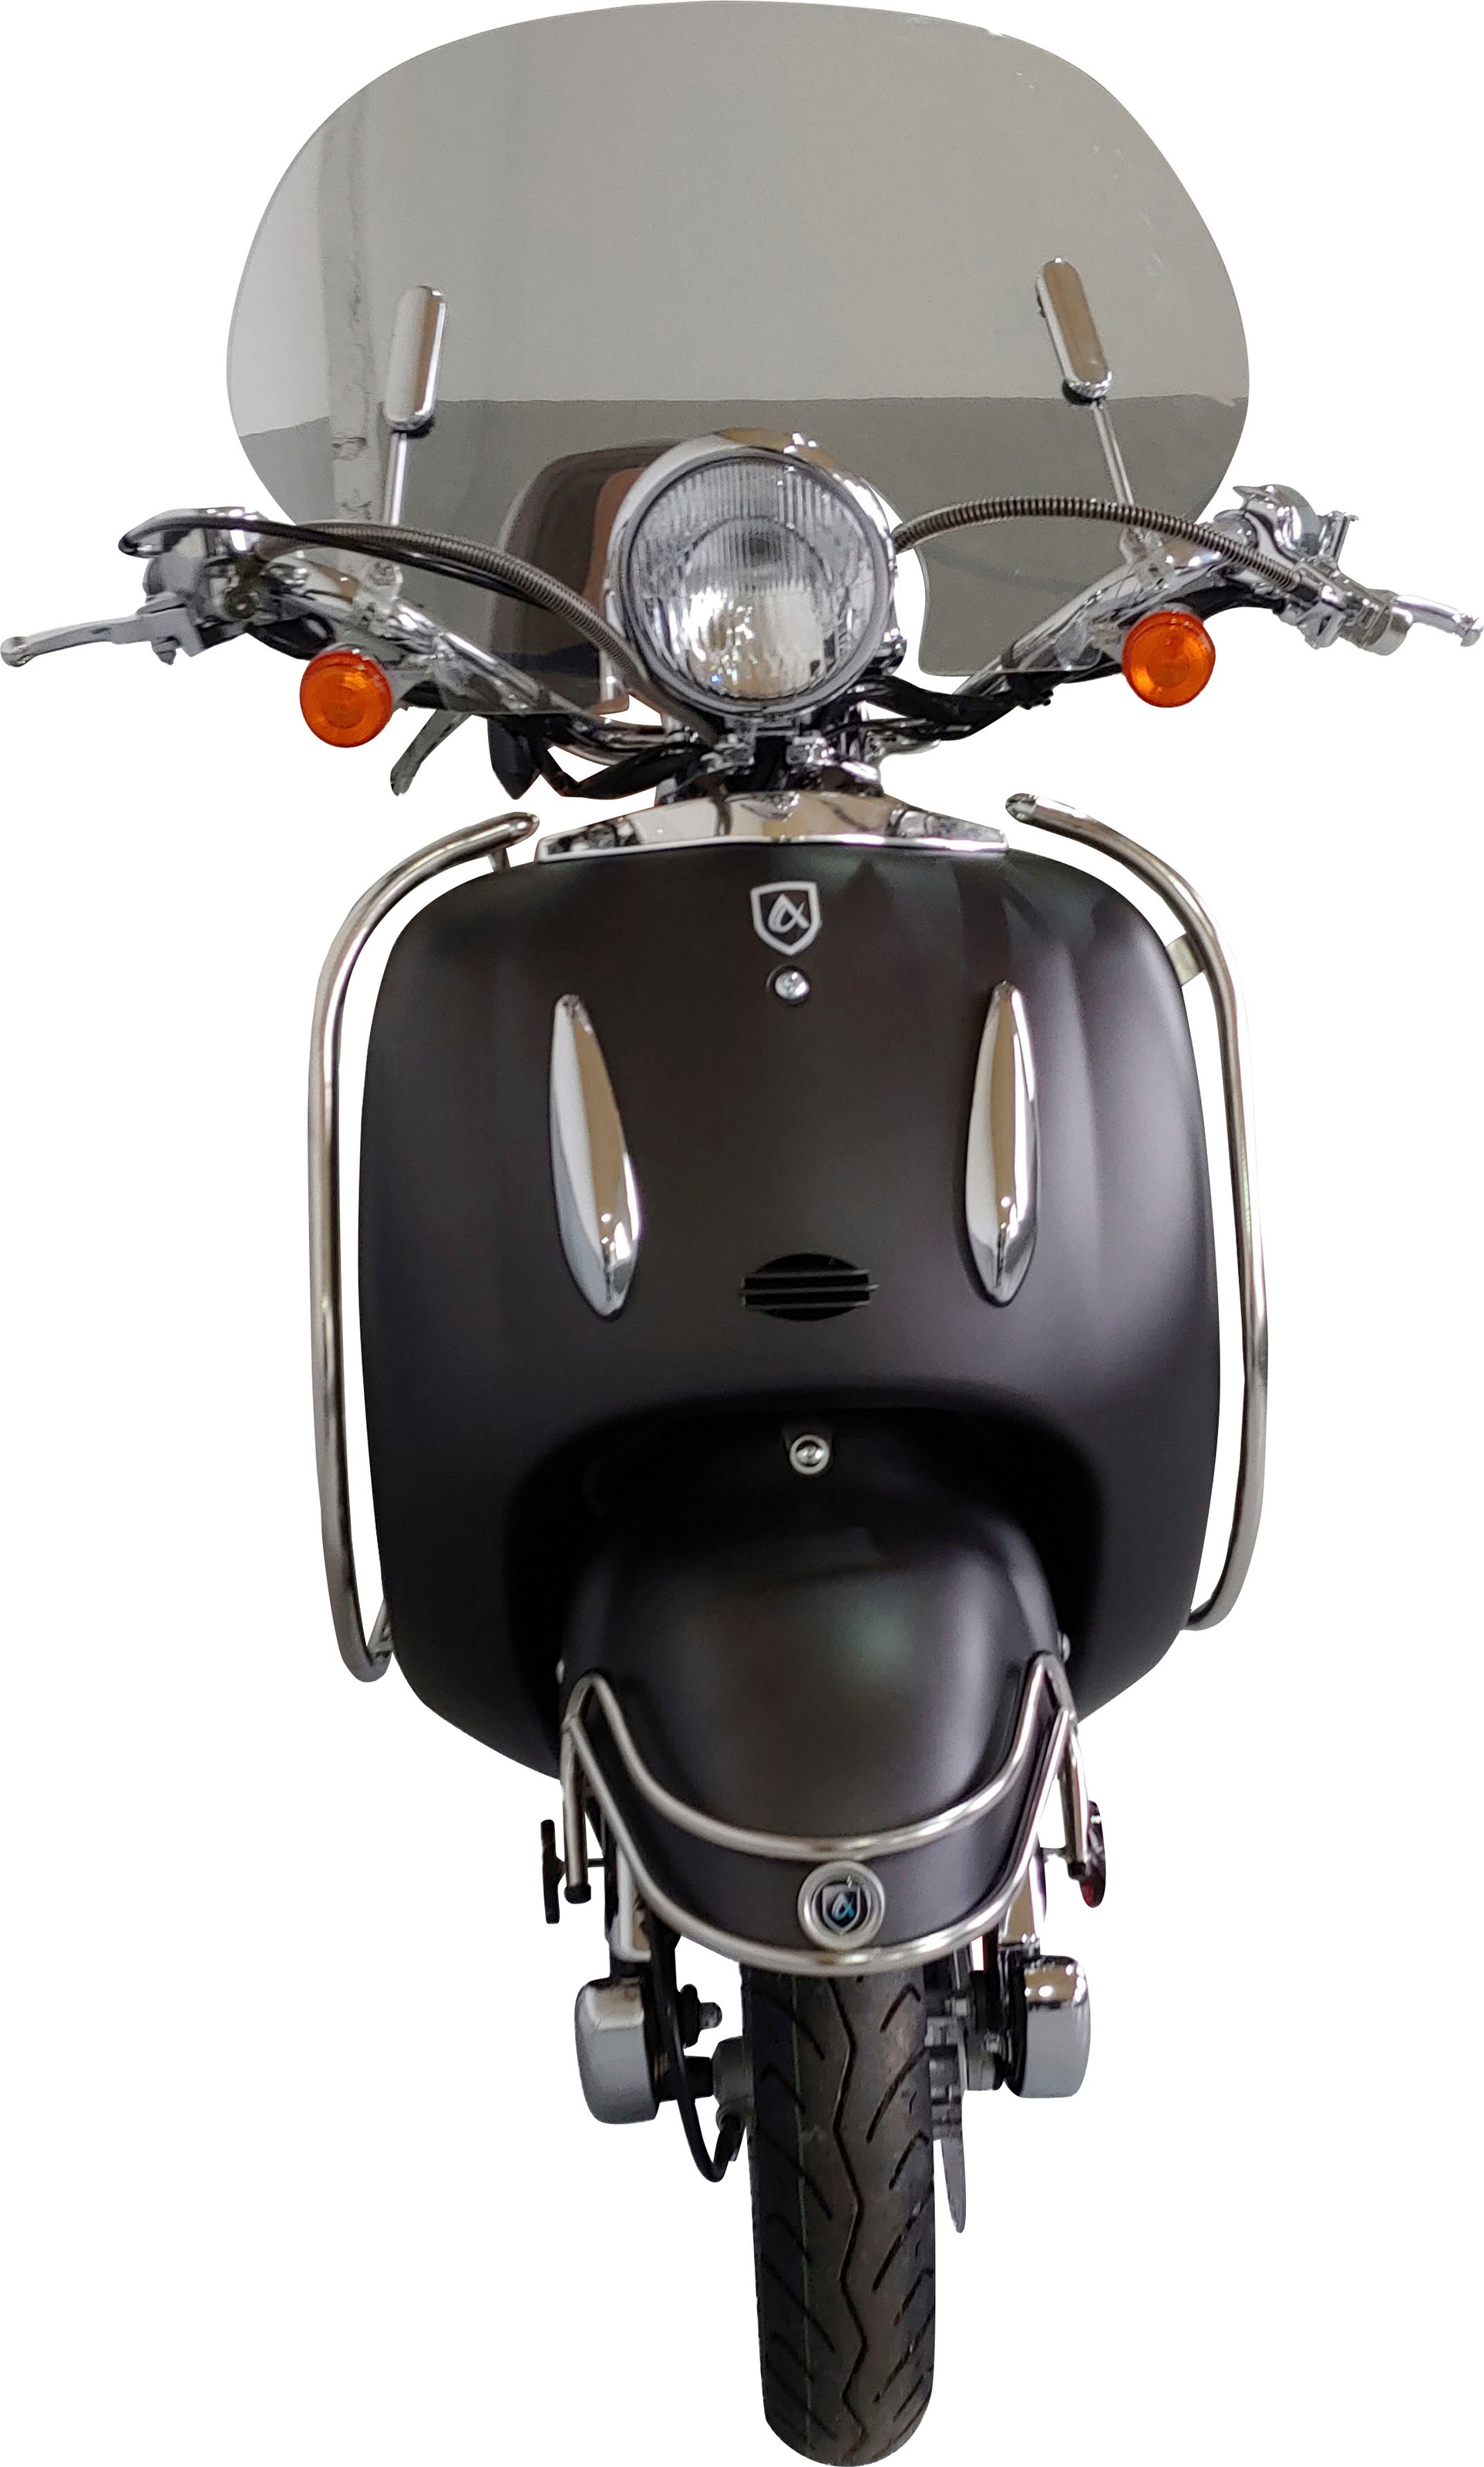 Alpha Motors Motorroller »Firenze Limited«, 50 cm³, 45 km/h, Euro 5, 3 PS  auf Rechnung | BAUR